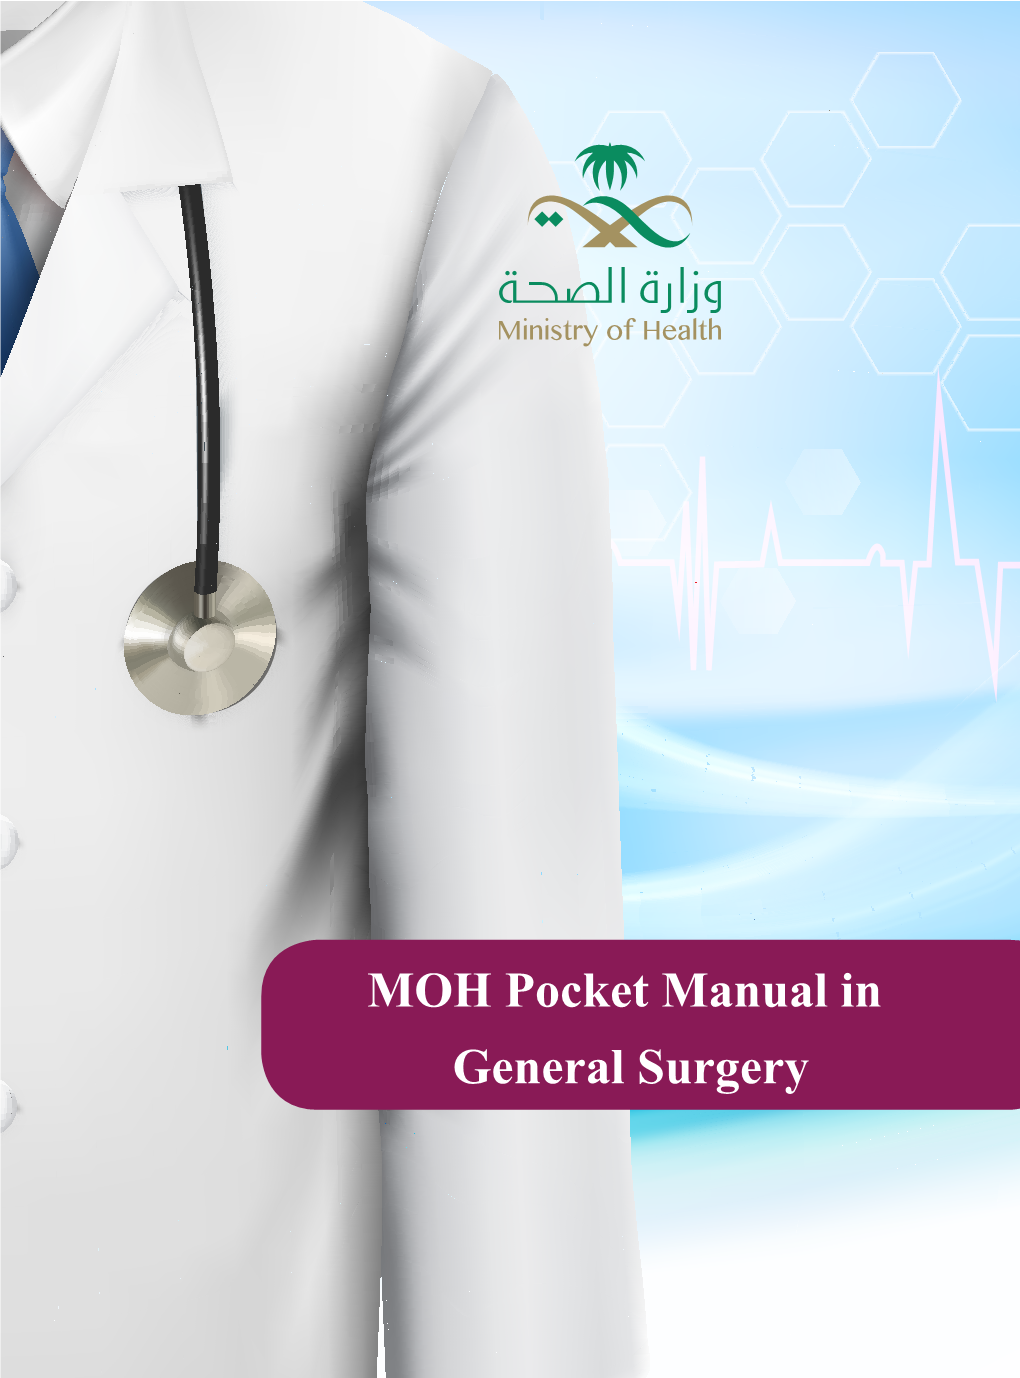 MOH Pocket Manual in General Surgery